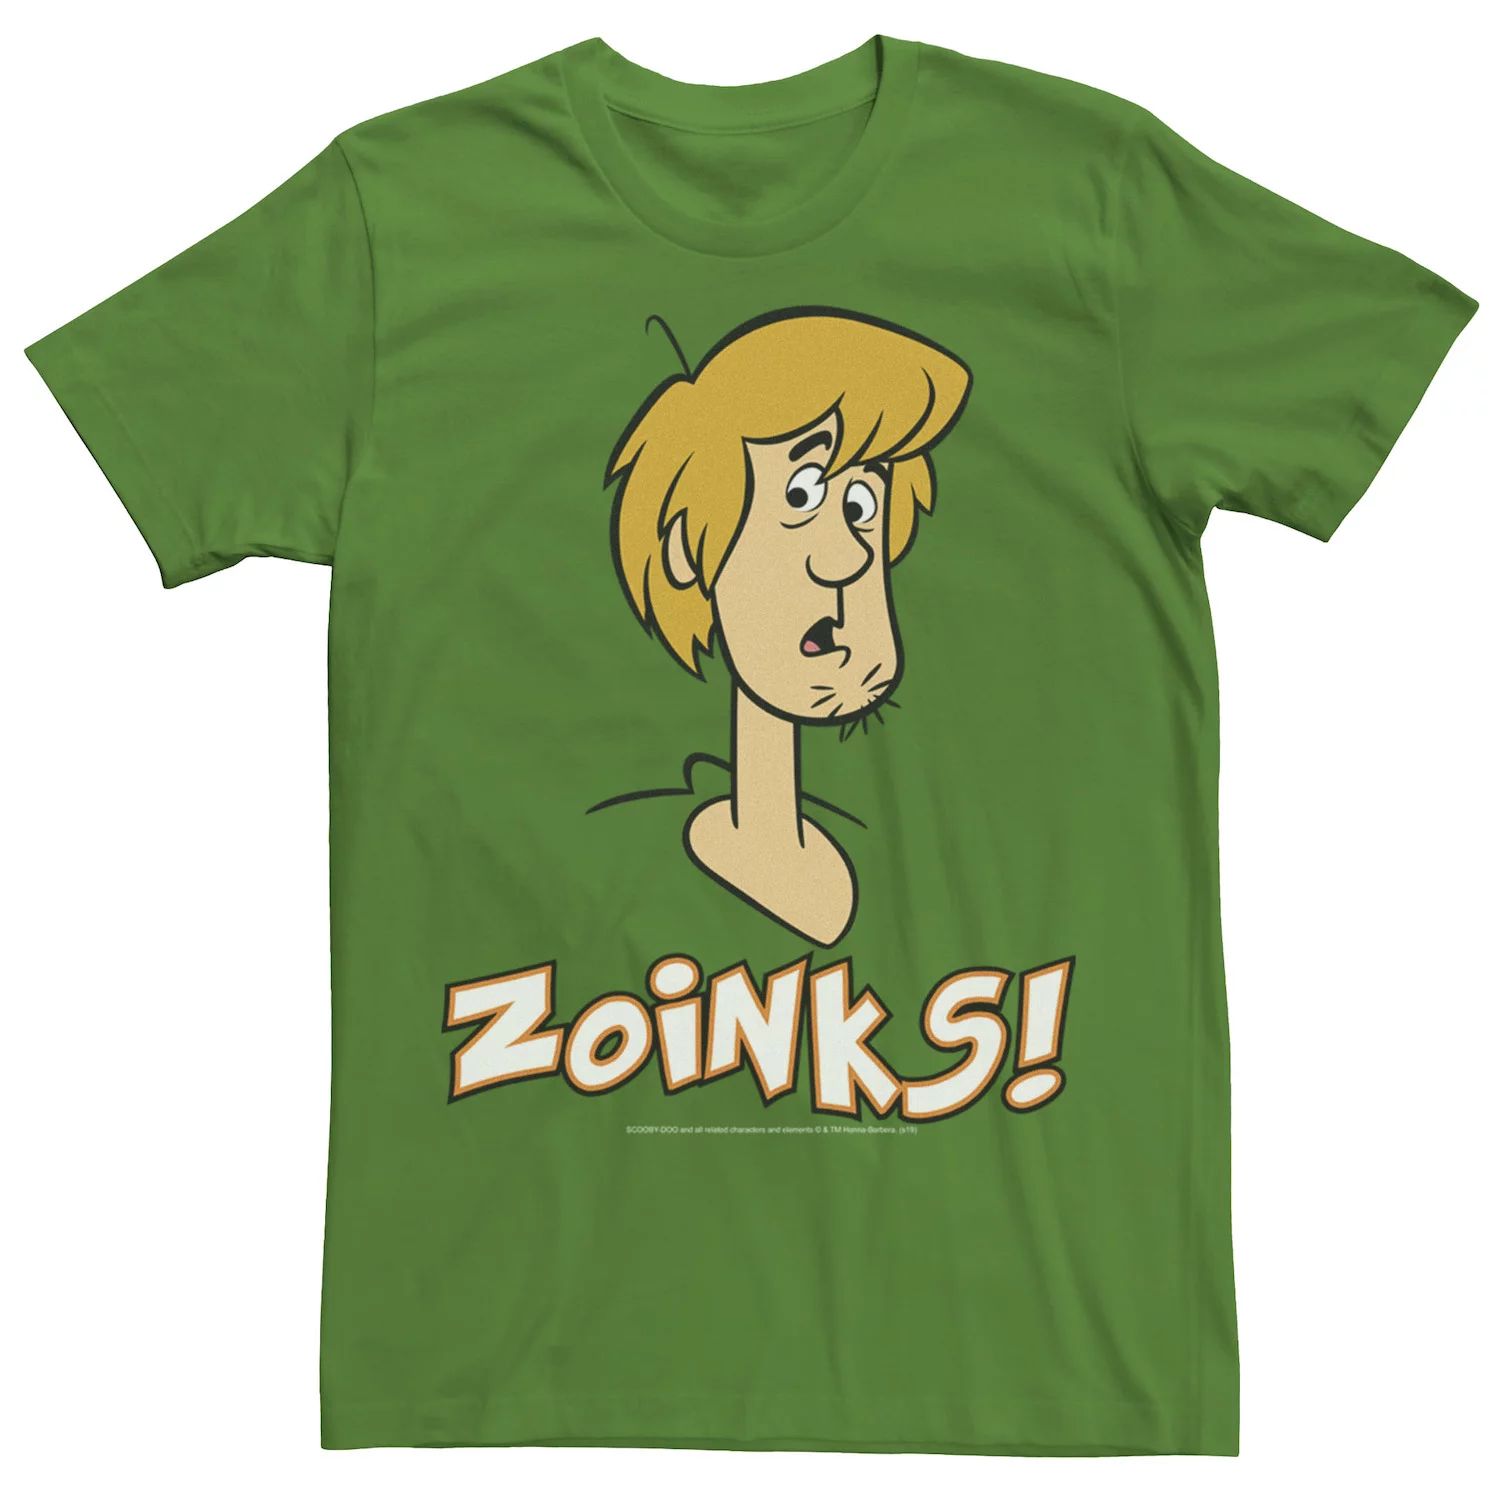 Мужская футболка с рисунком Scooby-Doo Shaggy Zoinks Licensed Character мужская футболка с коротким рукавом scaredy shaggy zoinks scooby doo fifth sun черный